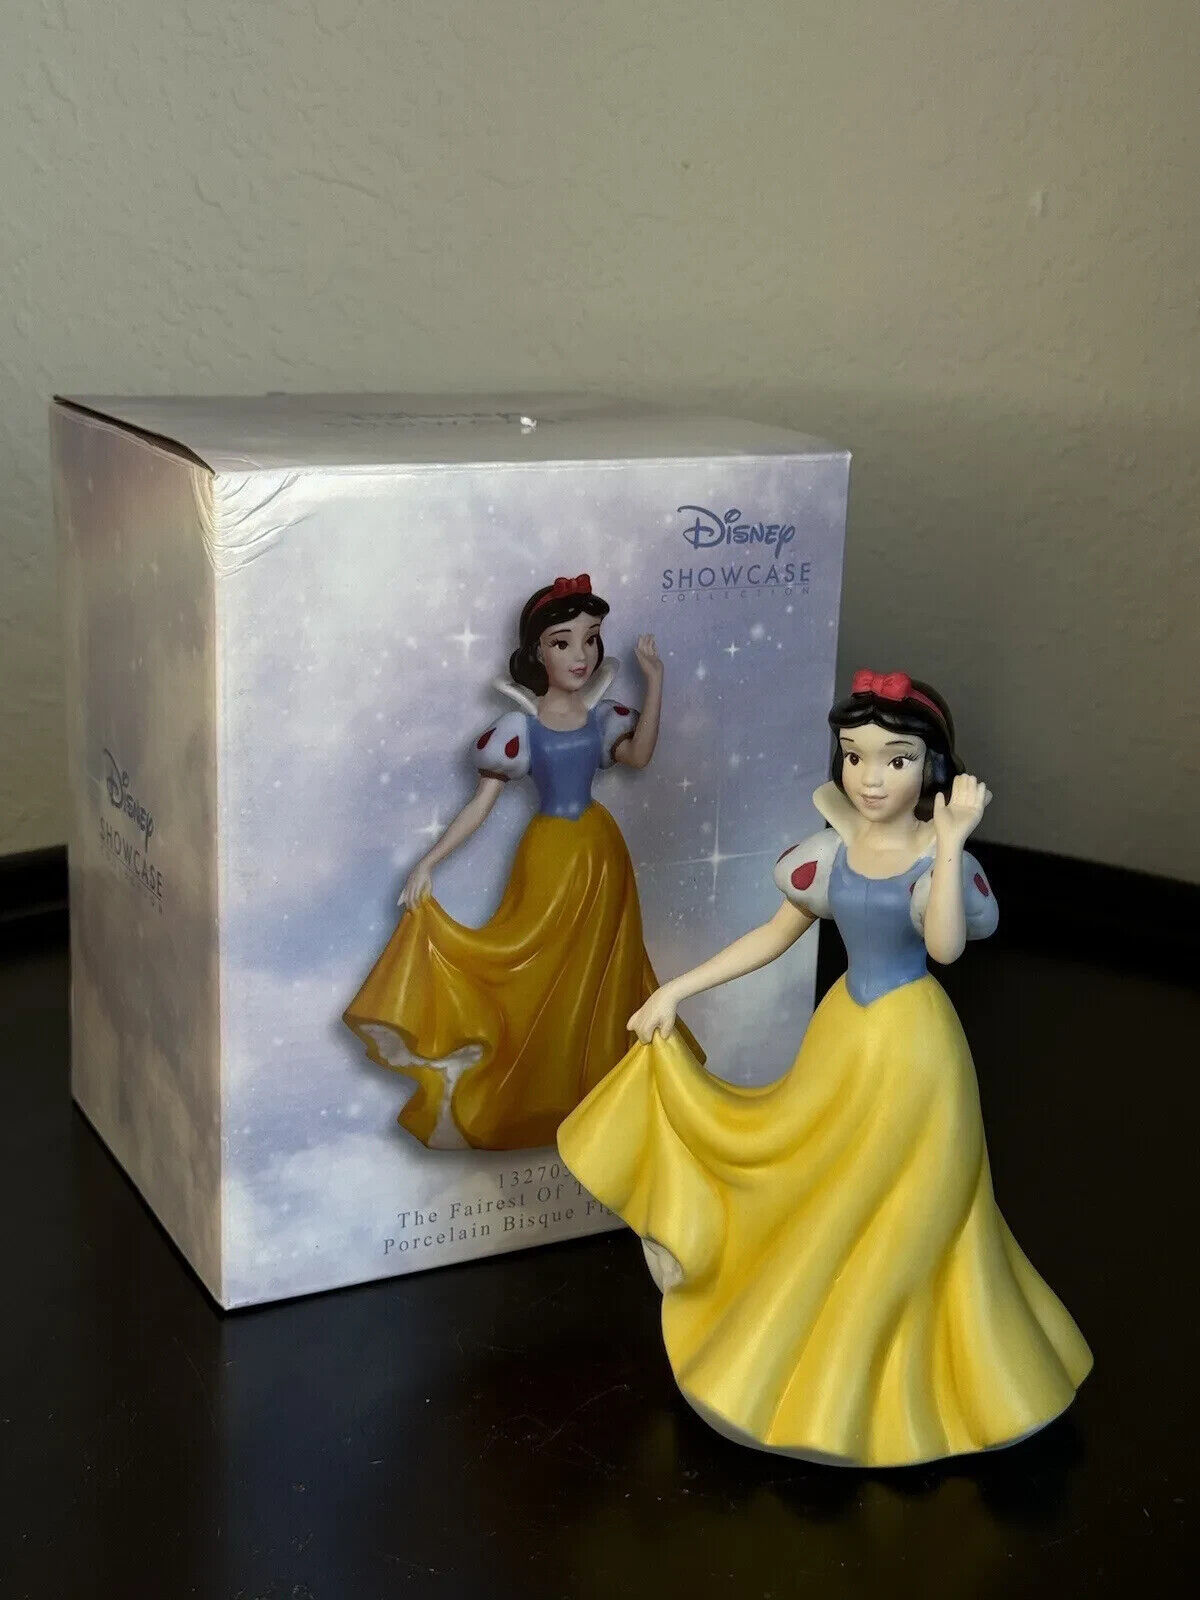 Disney Showcase Porcelain Snow White Figurine Porcelain Bisque 132705 NEW